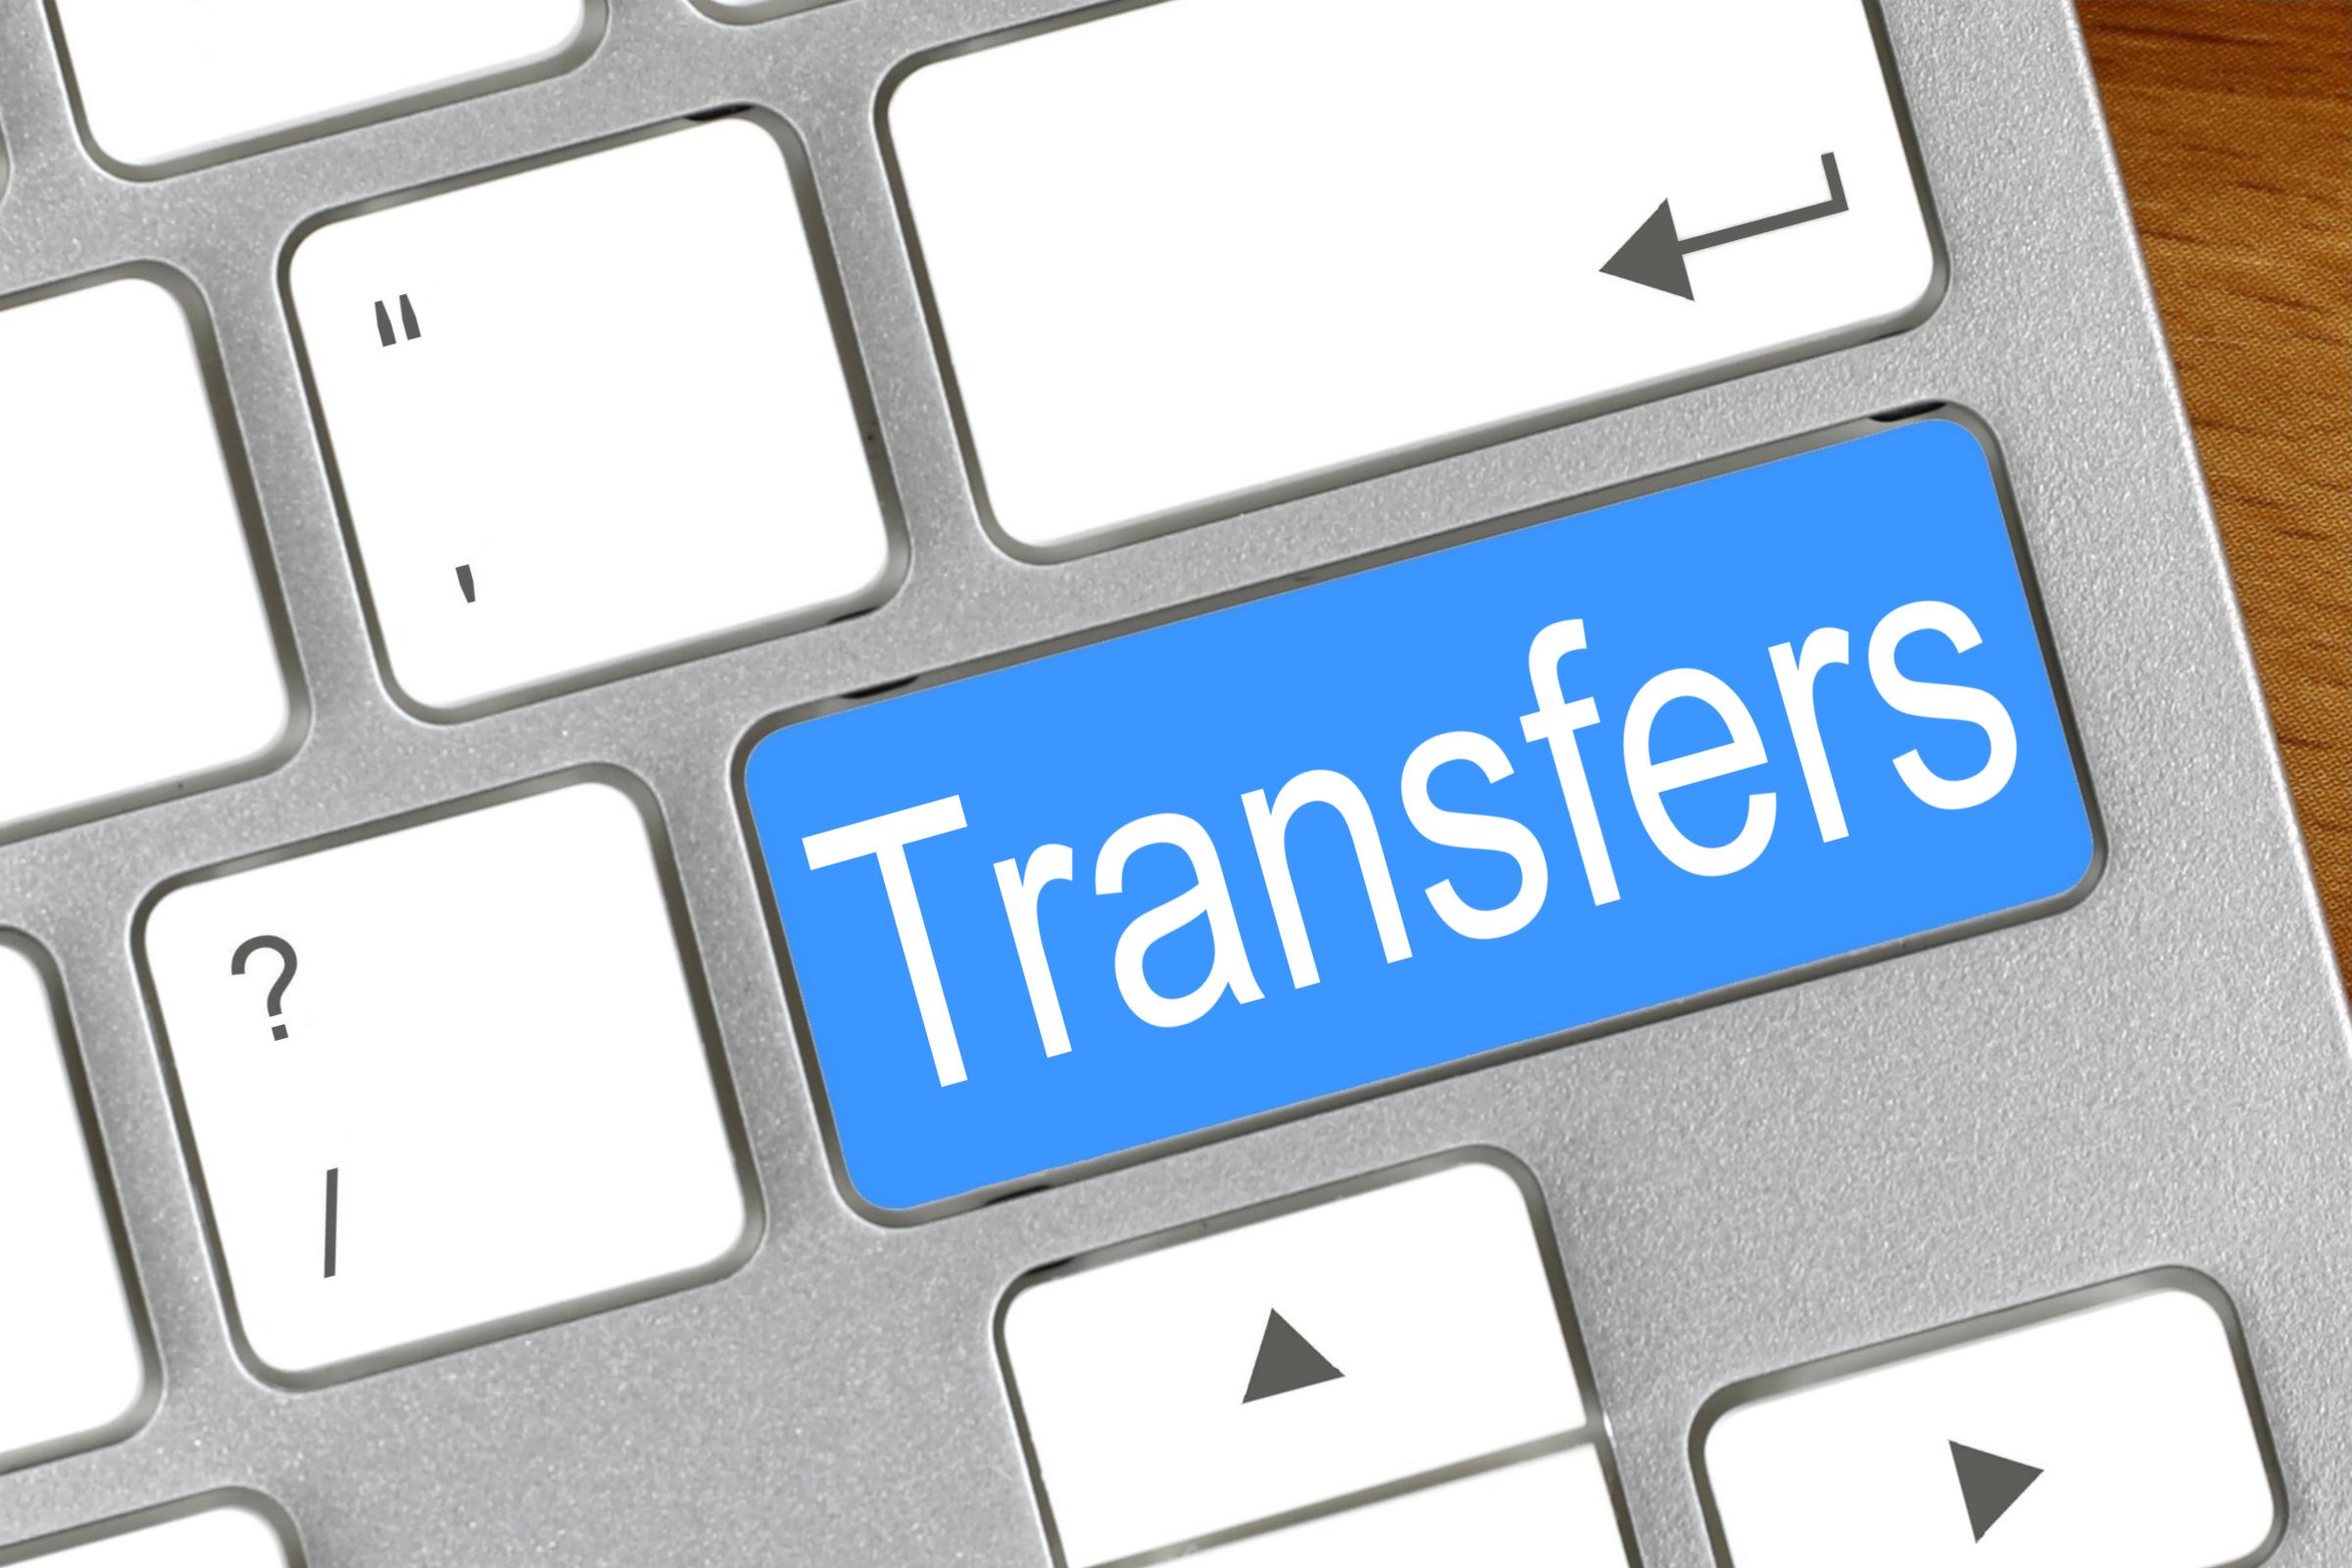 transfers